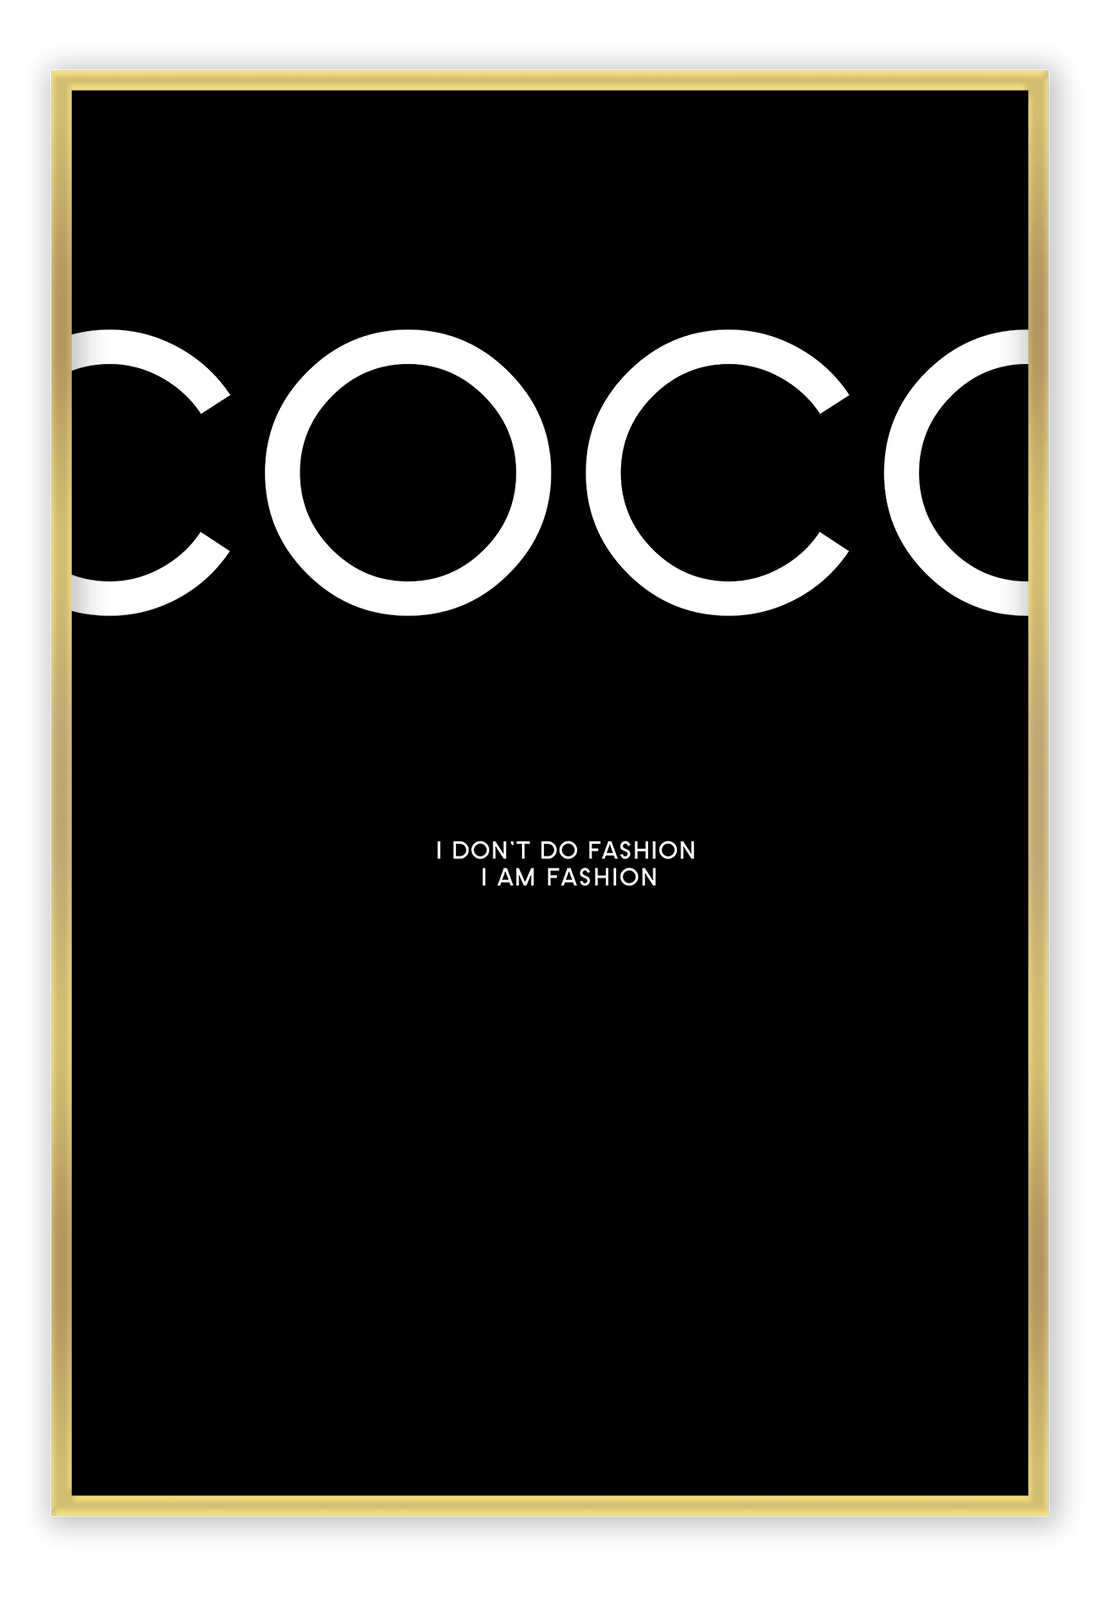 Canvas Print Coco Fashion Black Coco Fashion Black Wall Art : Ready to hang framed artwork. Brand